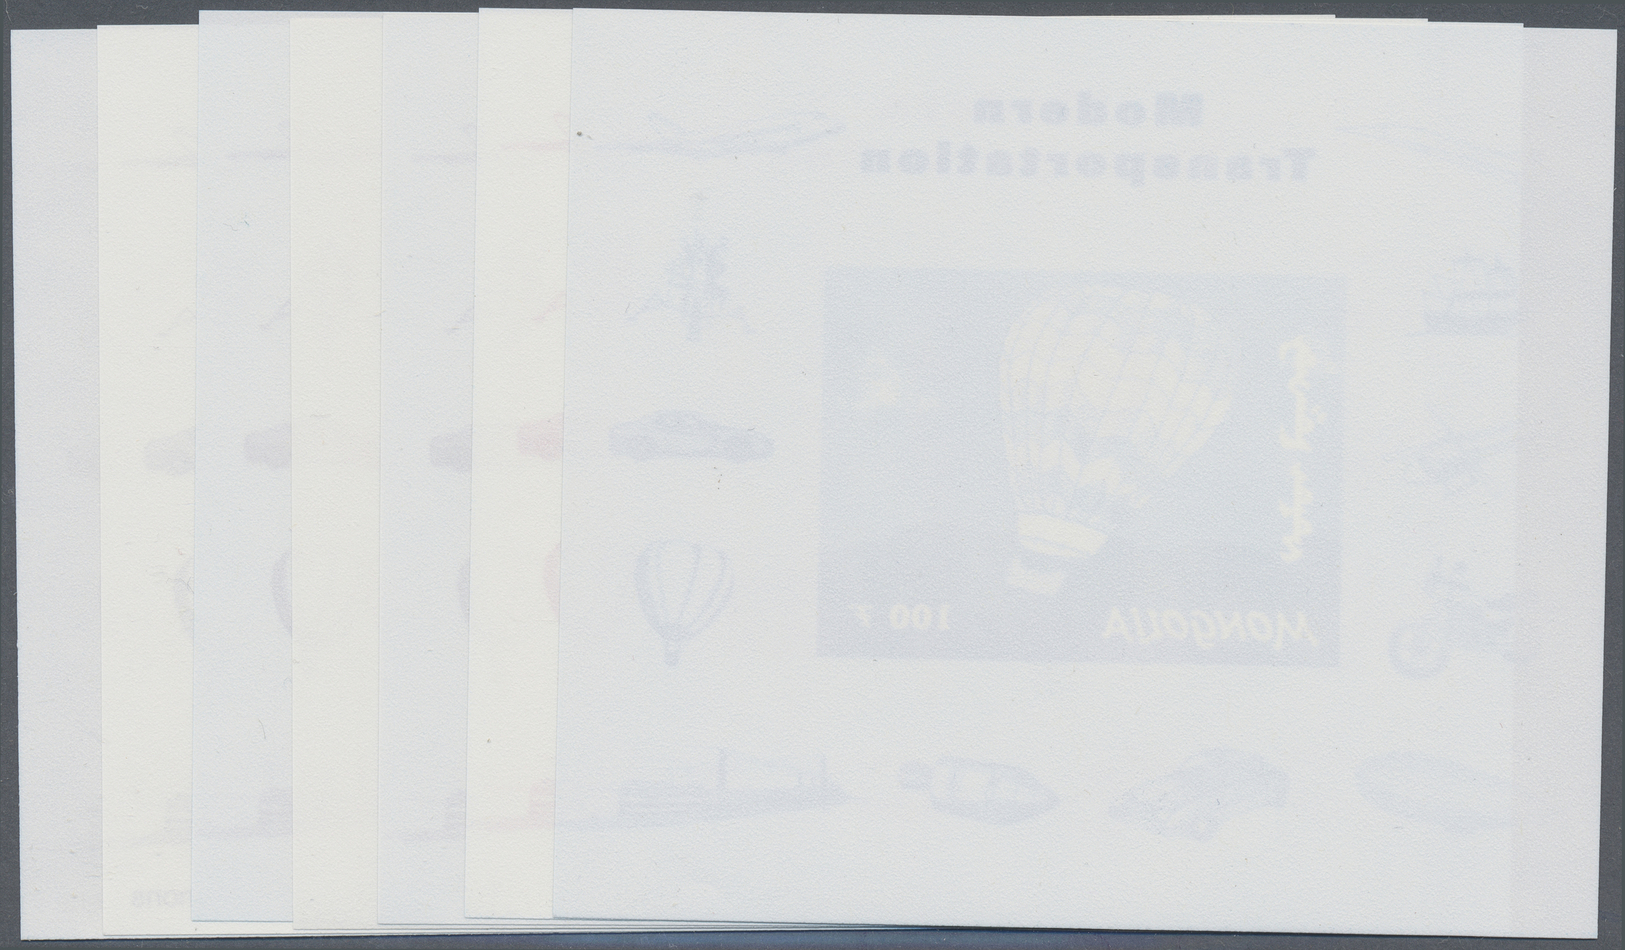 ** Thematik: Ballon-Luftfahrt / Balloon-aviation: 2001, MONGOLIA: Transportation BALLOON 100t. Special Miniature Sheet I - Trees